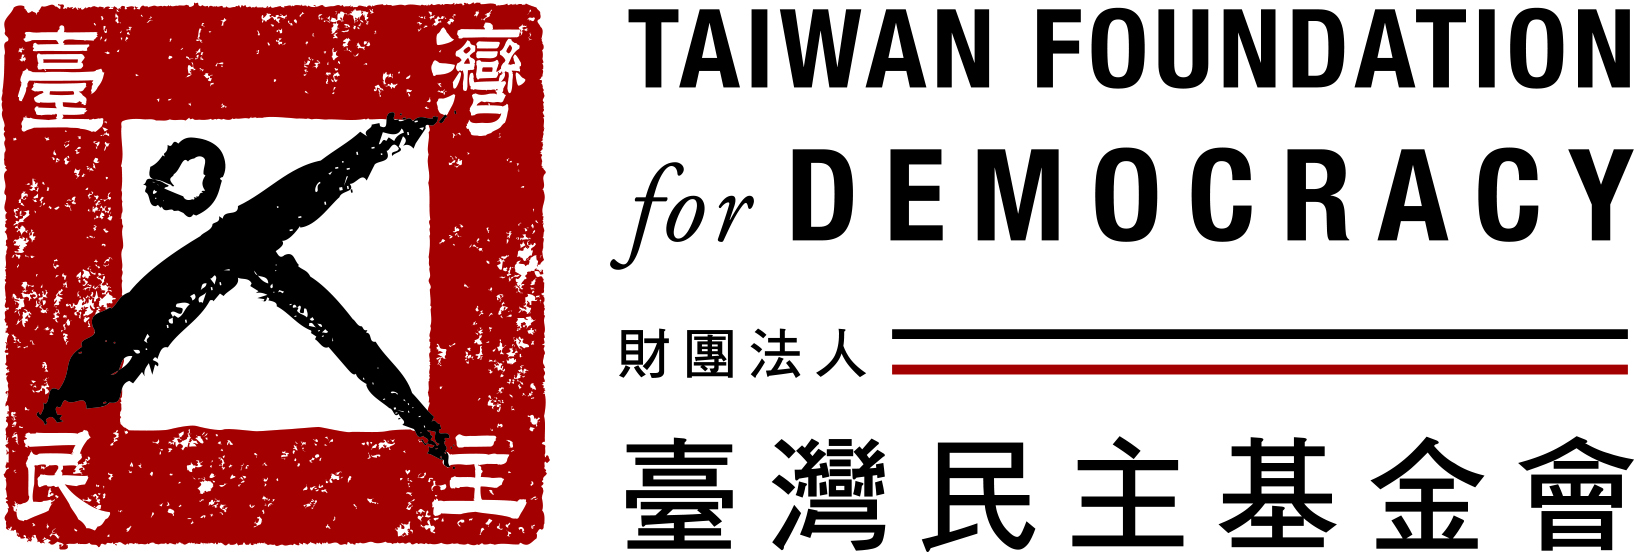 Taiwan foundation